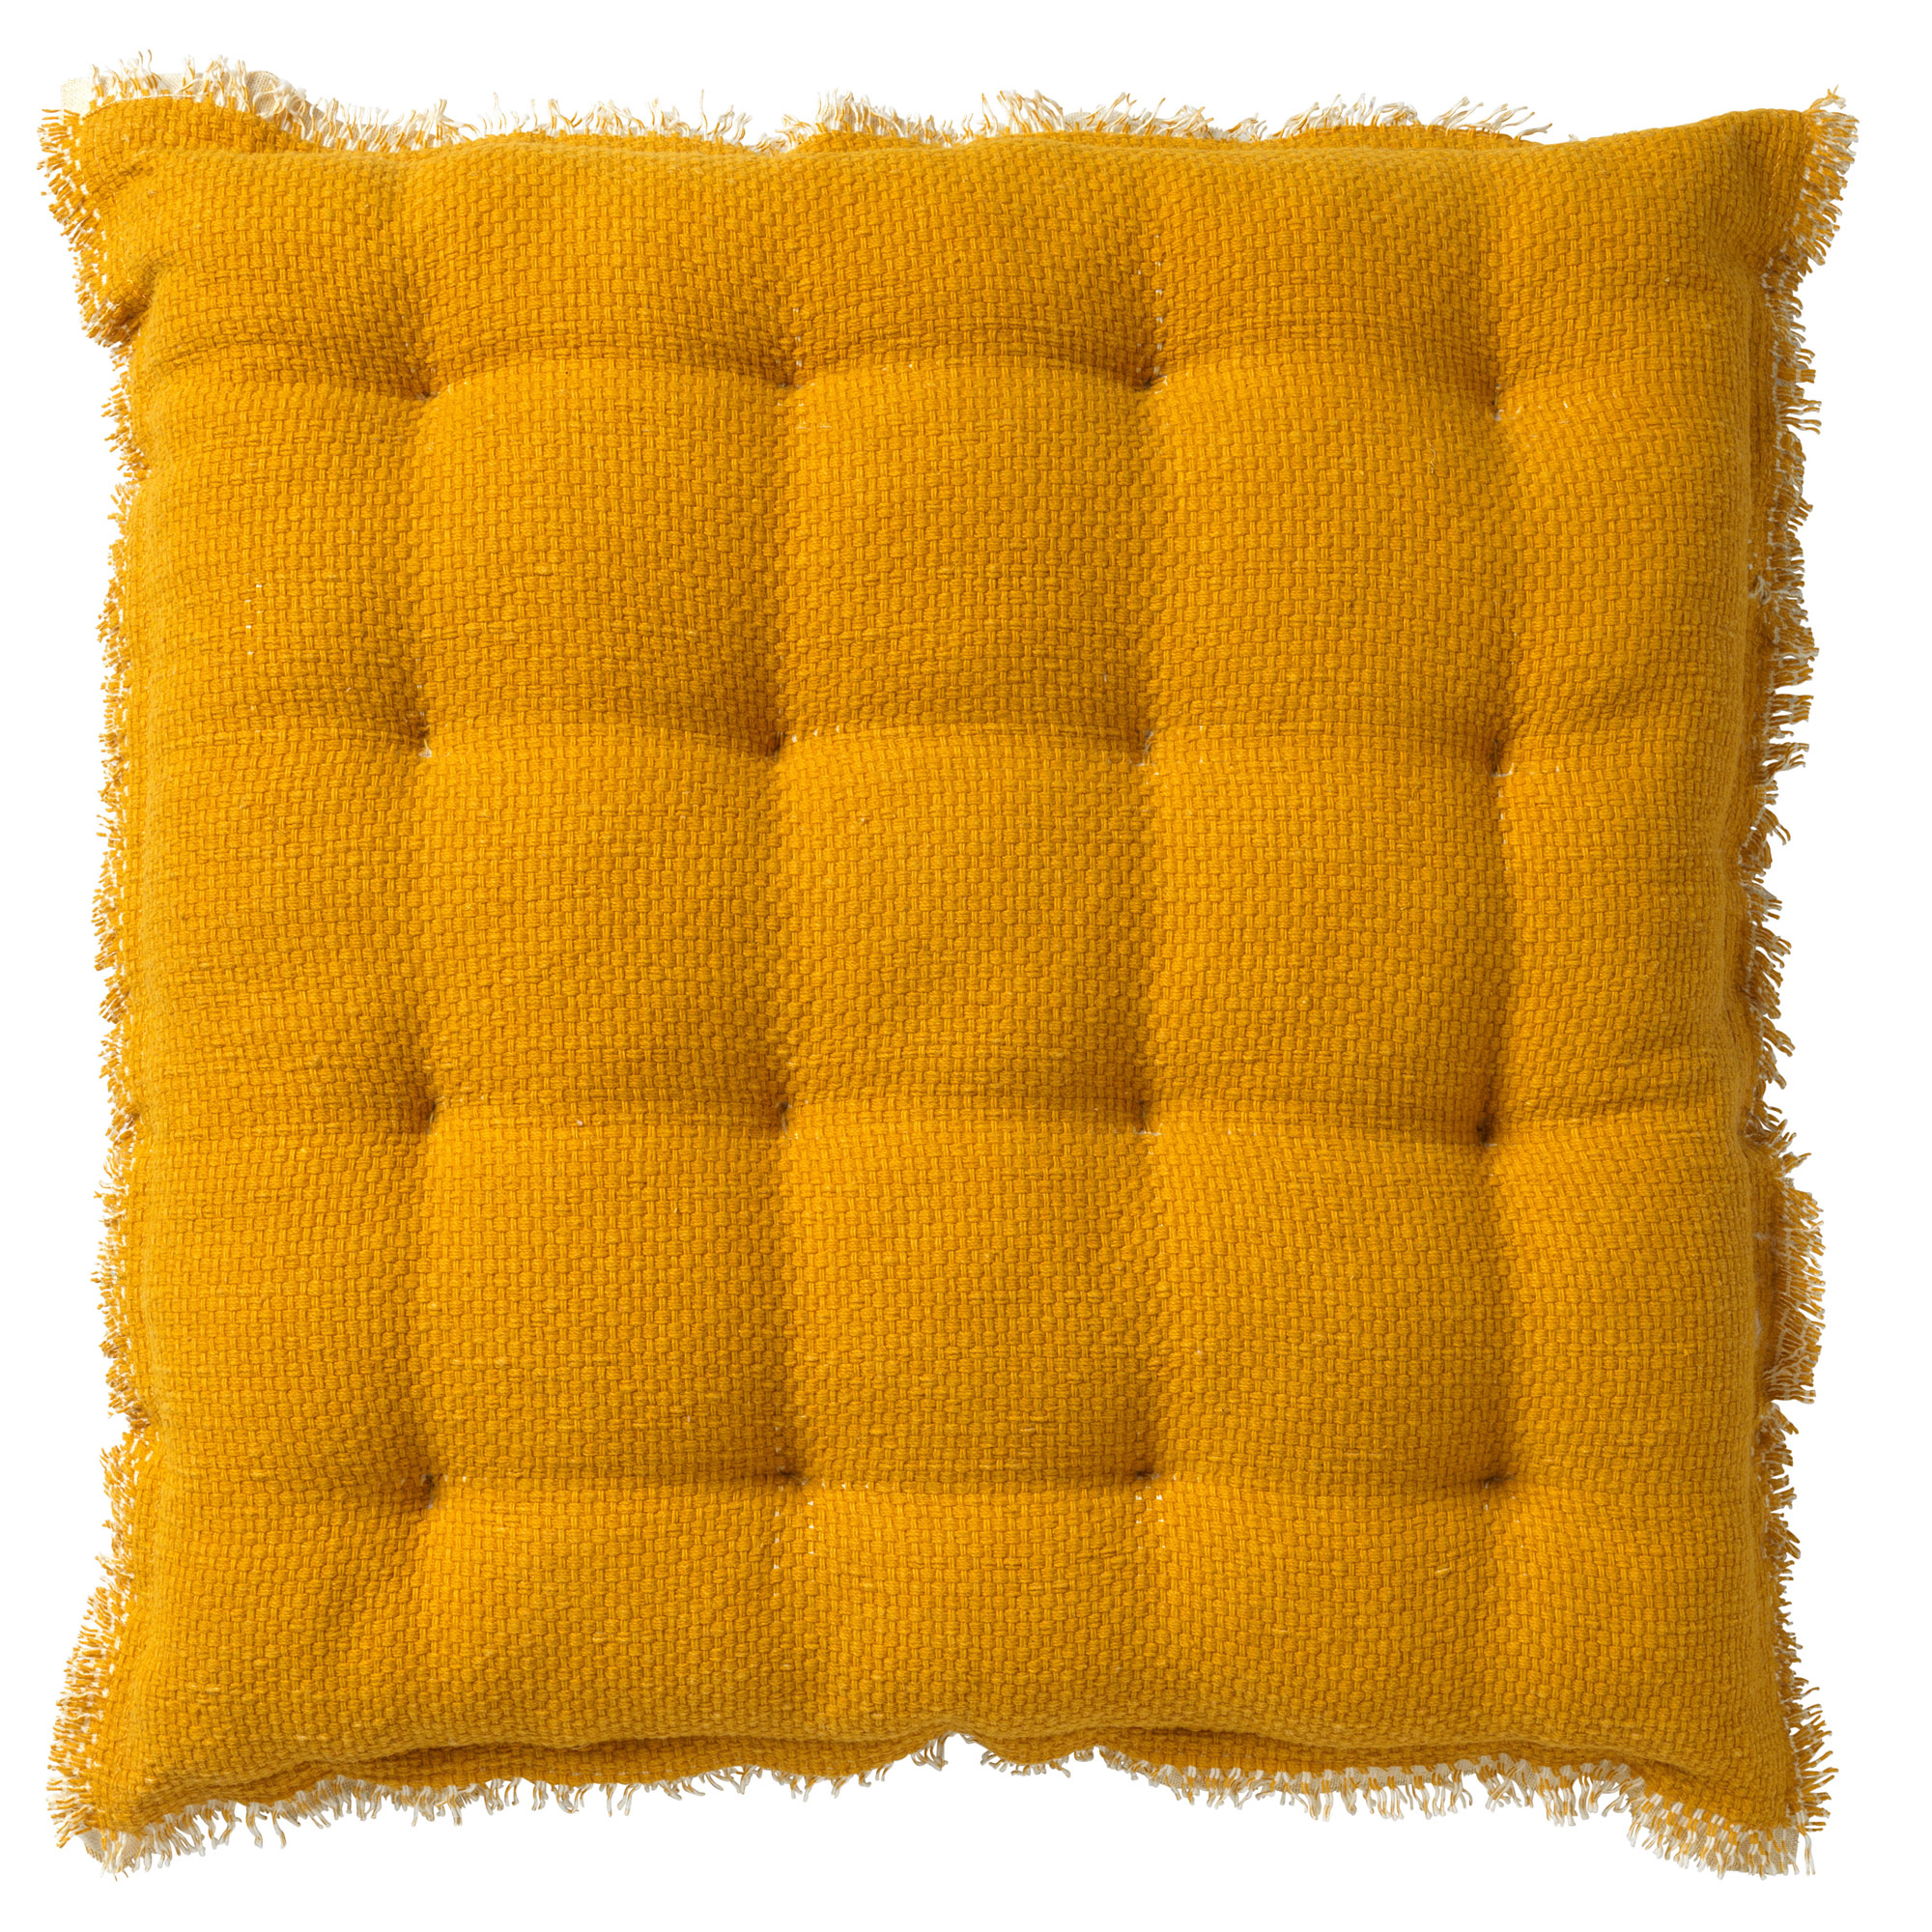 BURTO - Seat pad cushion washed coton Golden Glow 40x40 cm